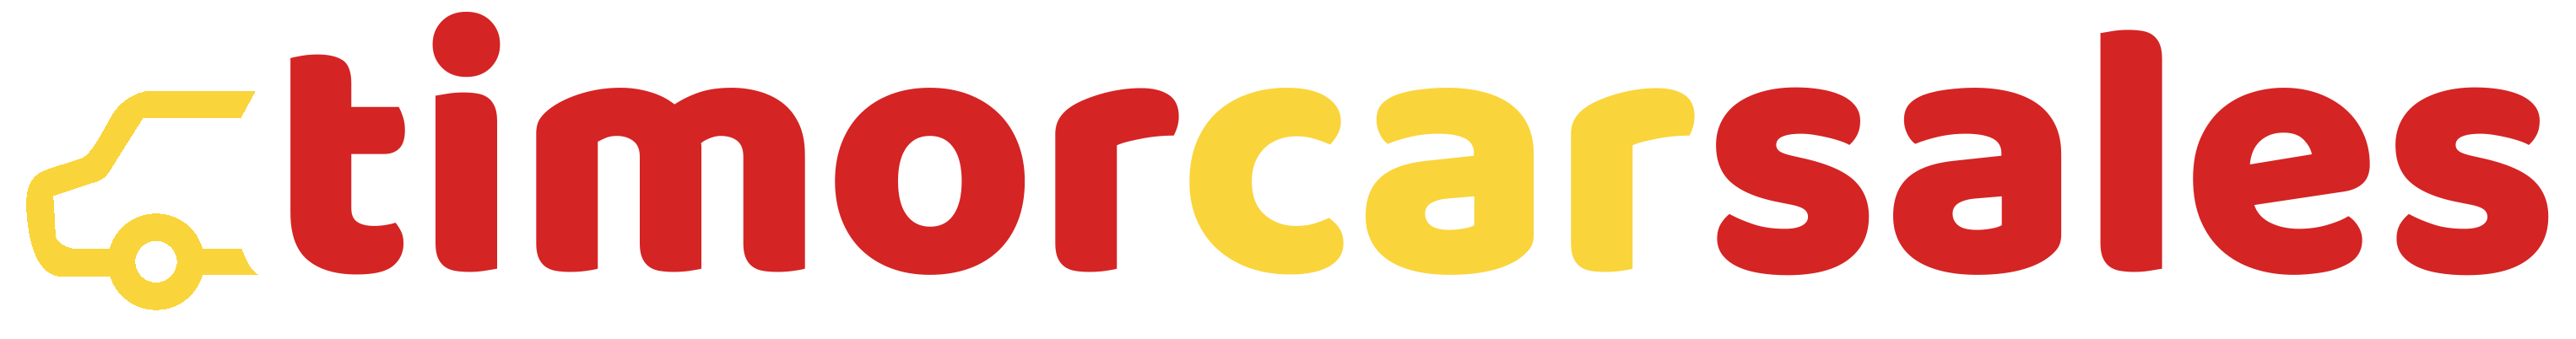 Timorcarsales logo